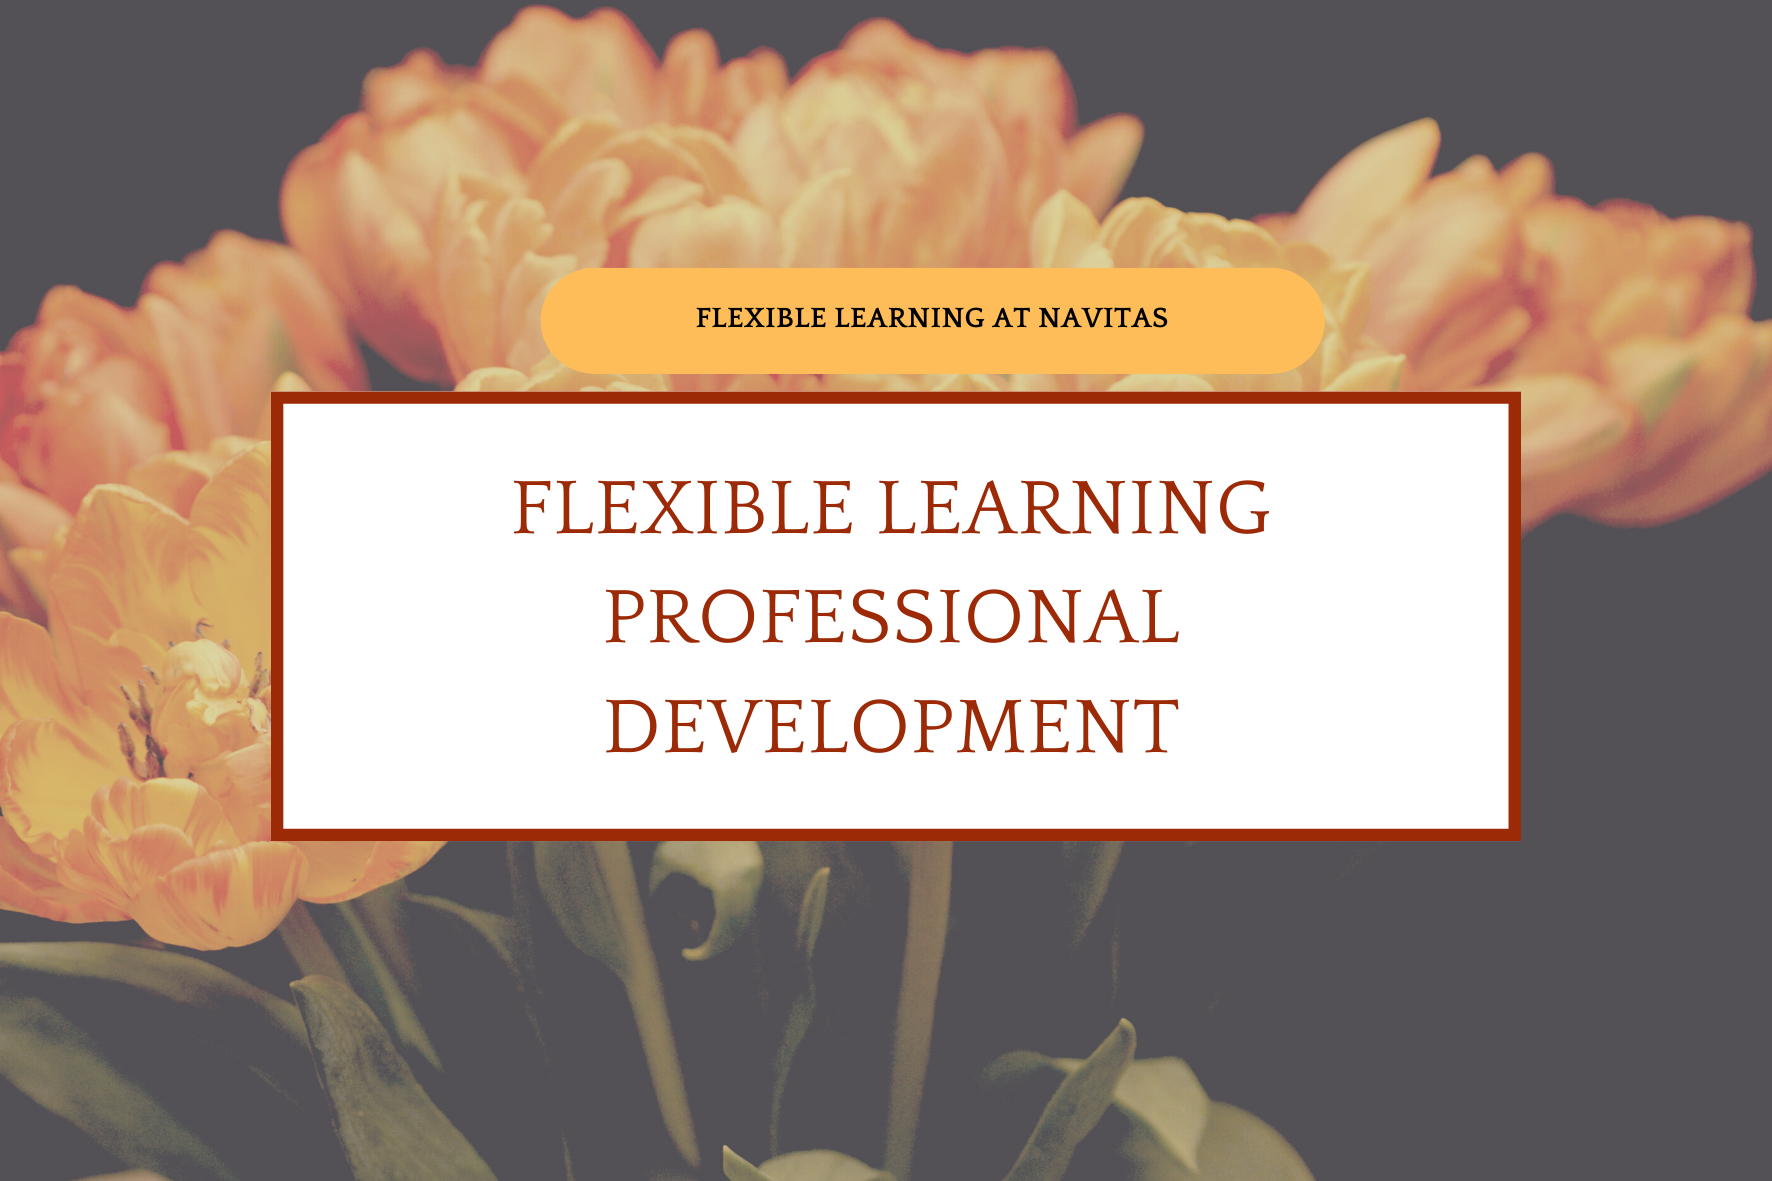 Flexible Learning professional development opportunities